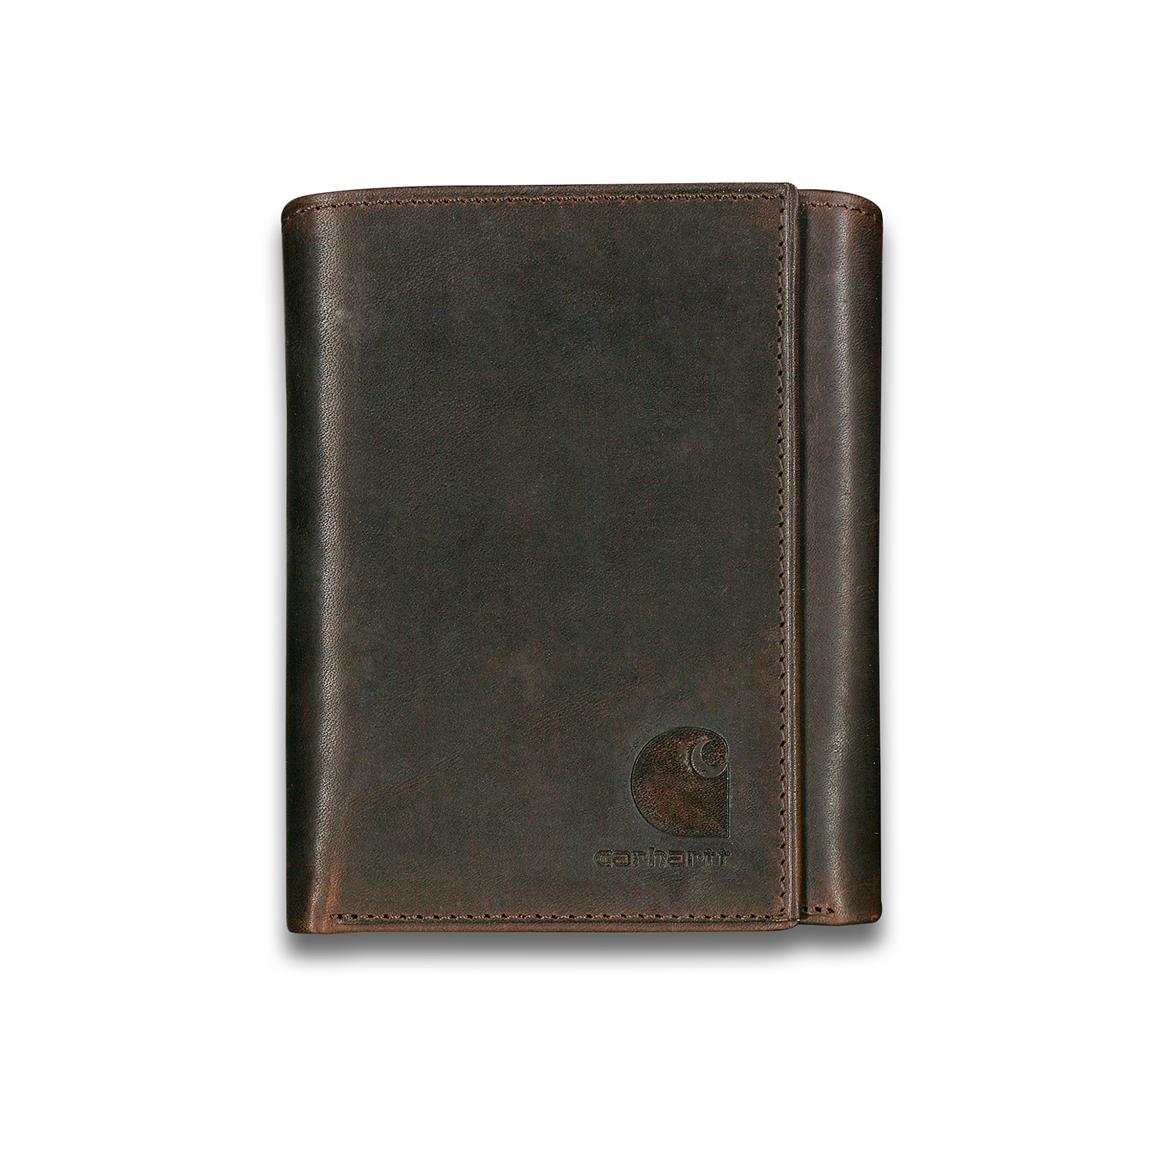 Carhartt Oil Tan Leather Wallet - 660945, Wallets at Sportsman's Guide